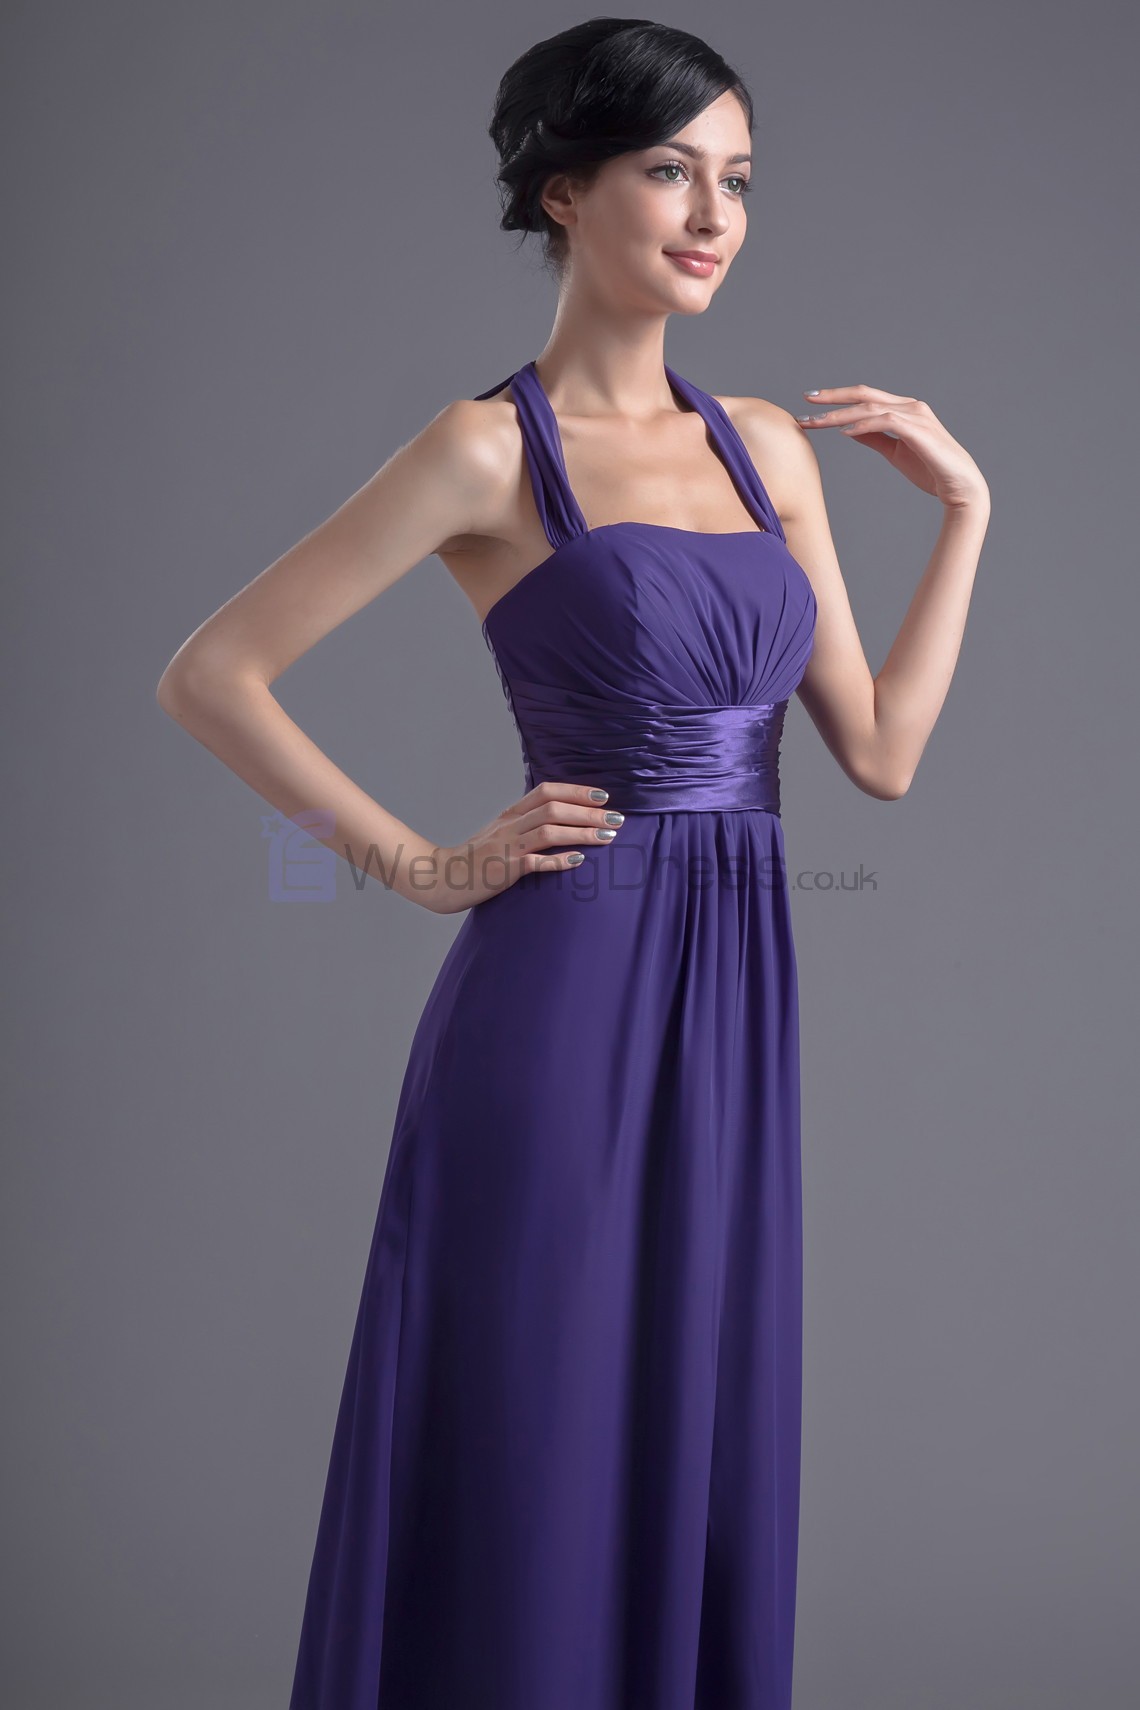 Halter Neck Floor Length Dress : Review Clothing Brand